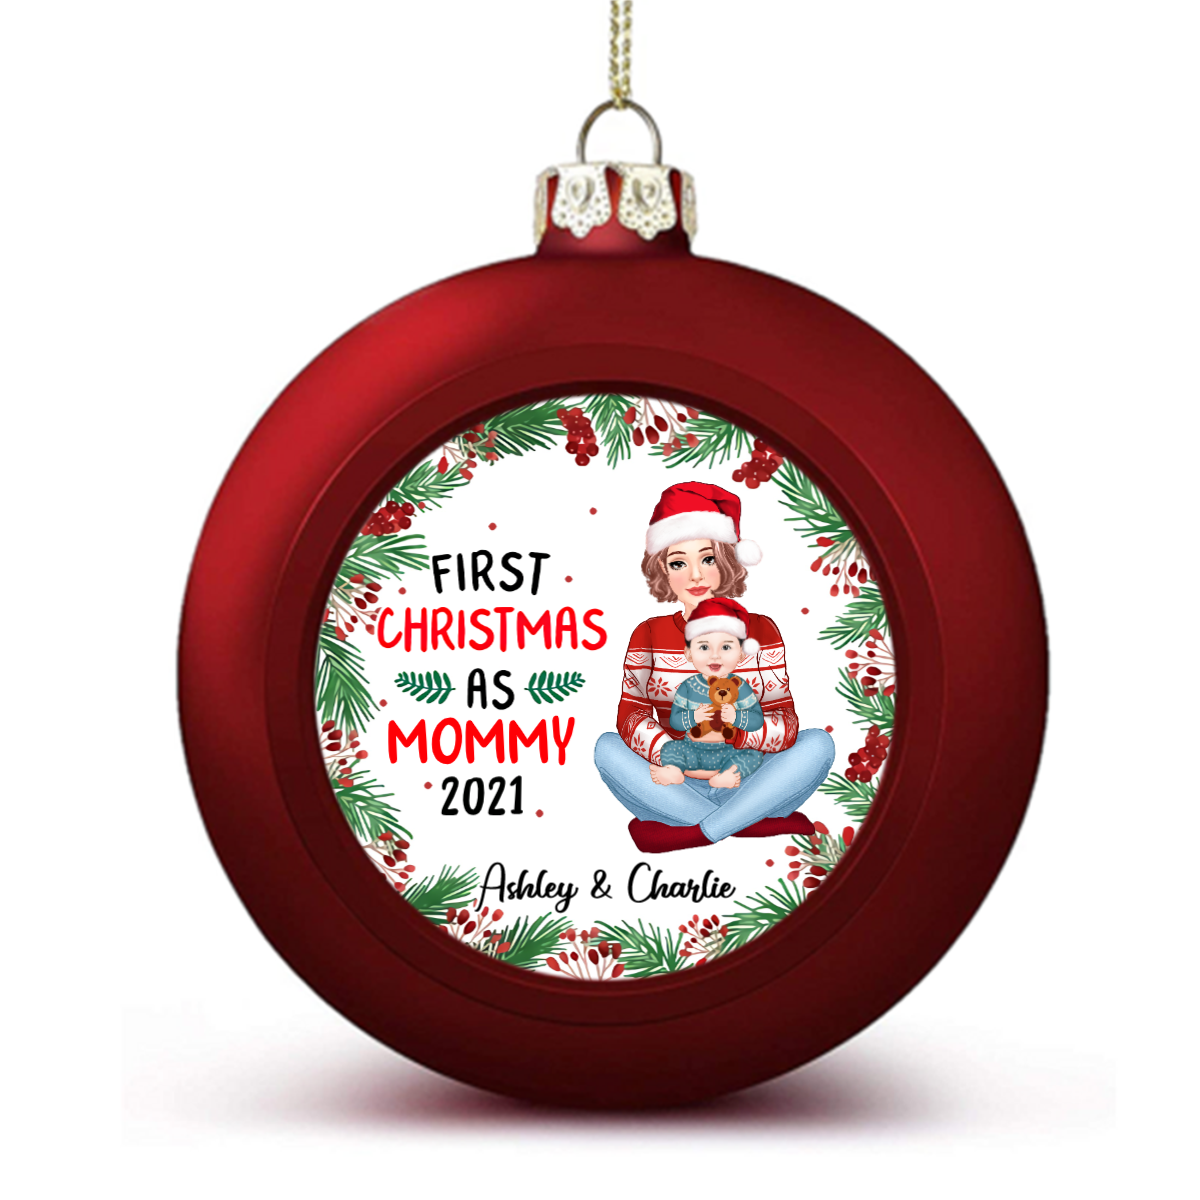 First Christmas As Mom Grandma Personalized Ball Ornaments